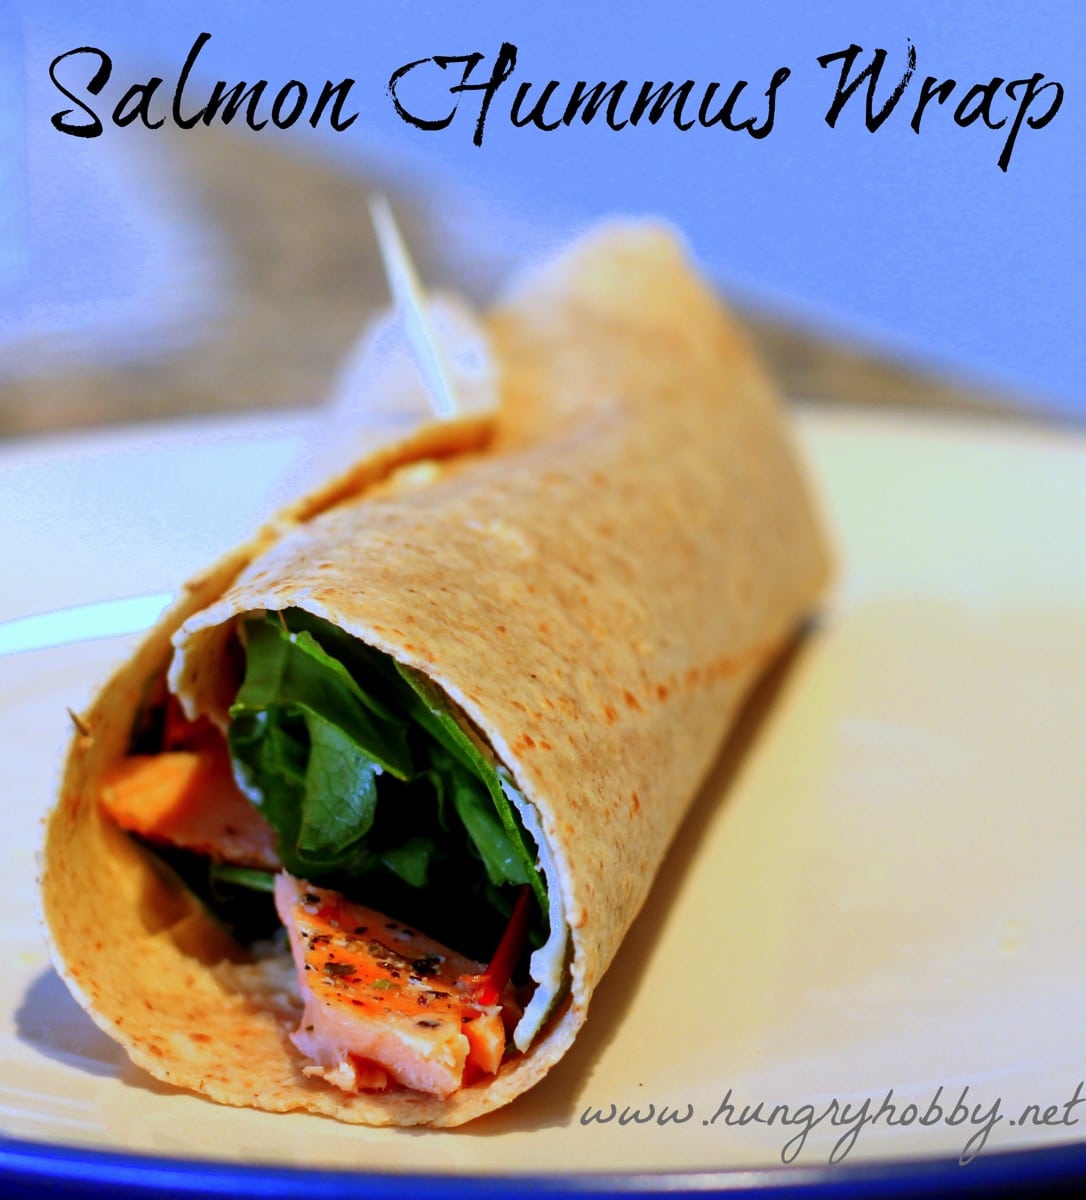 Salmon hummus wrap www hungryhobby net